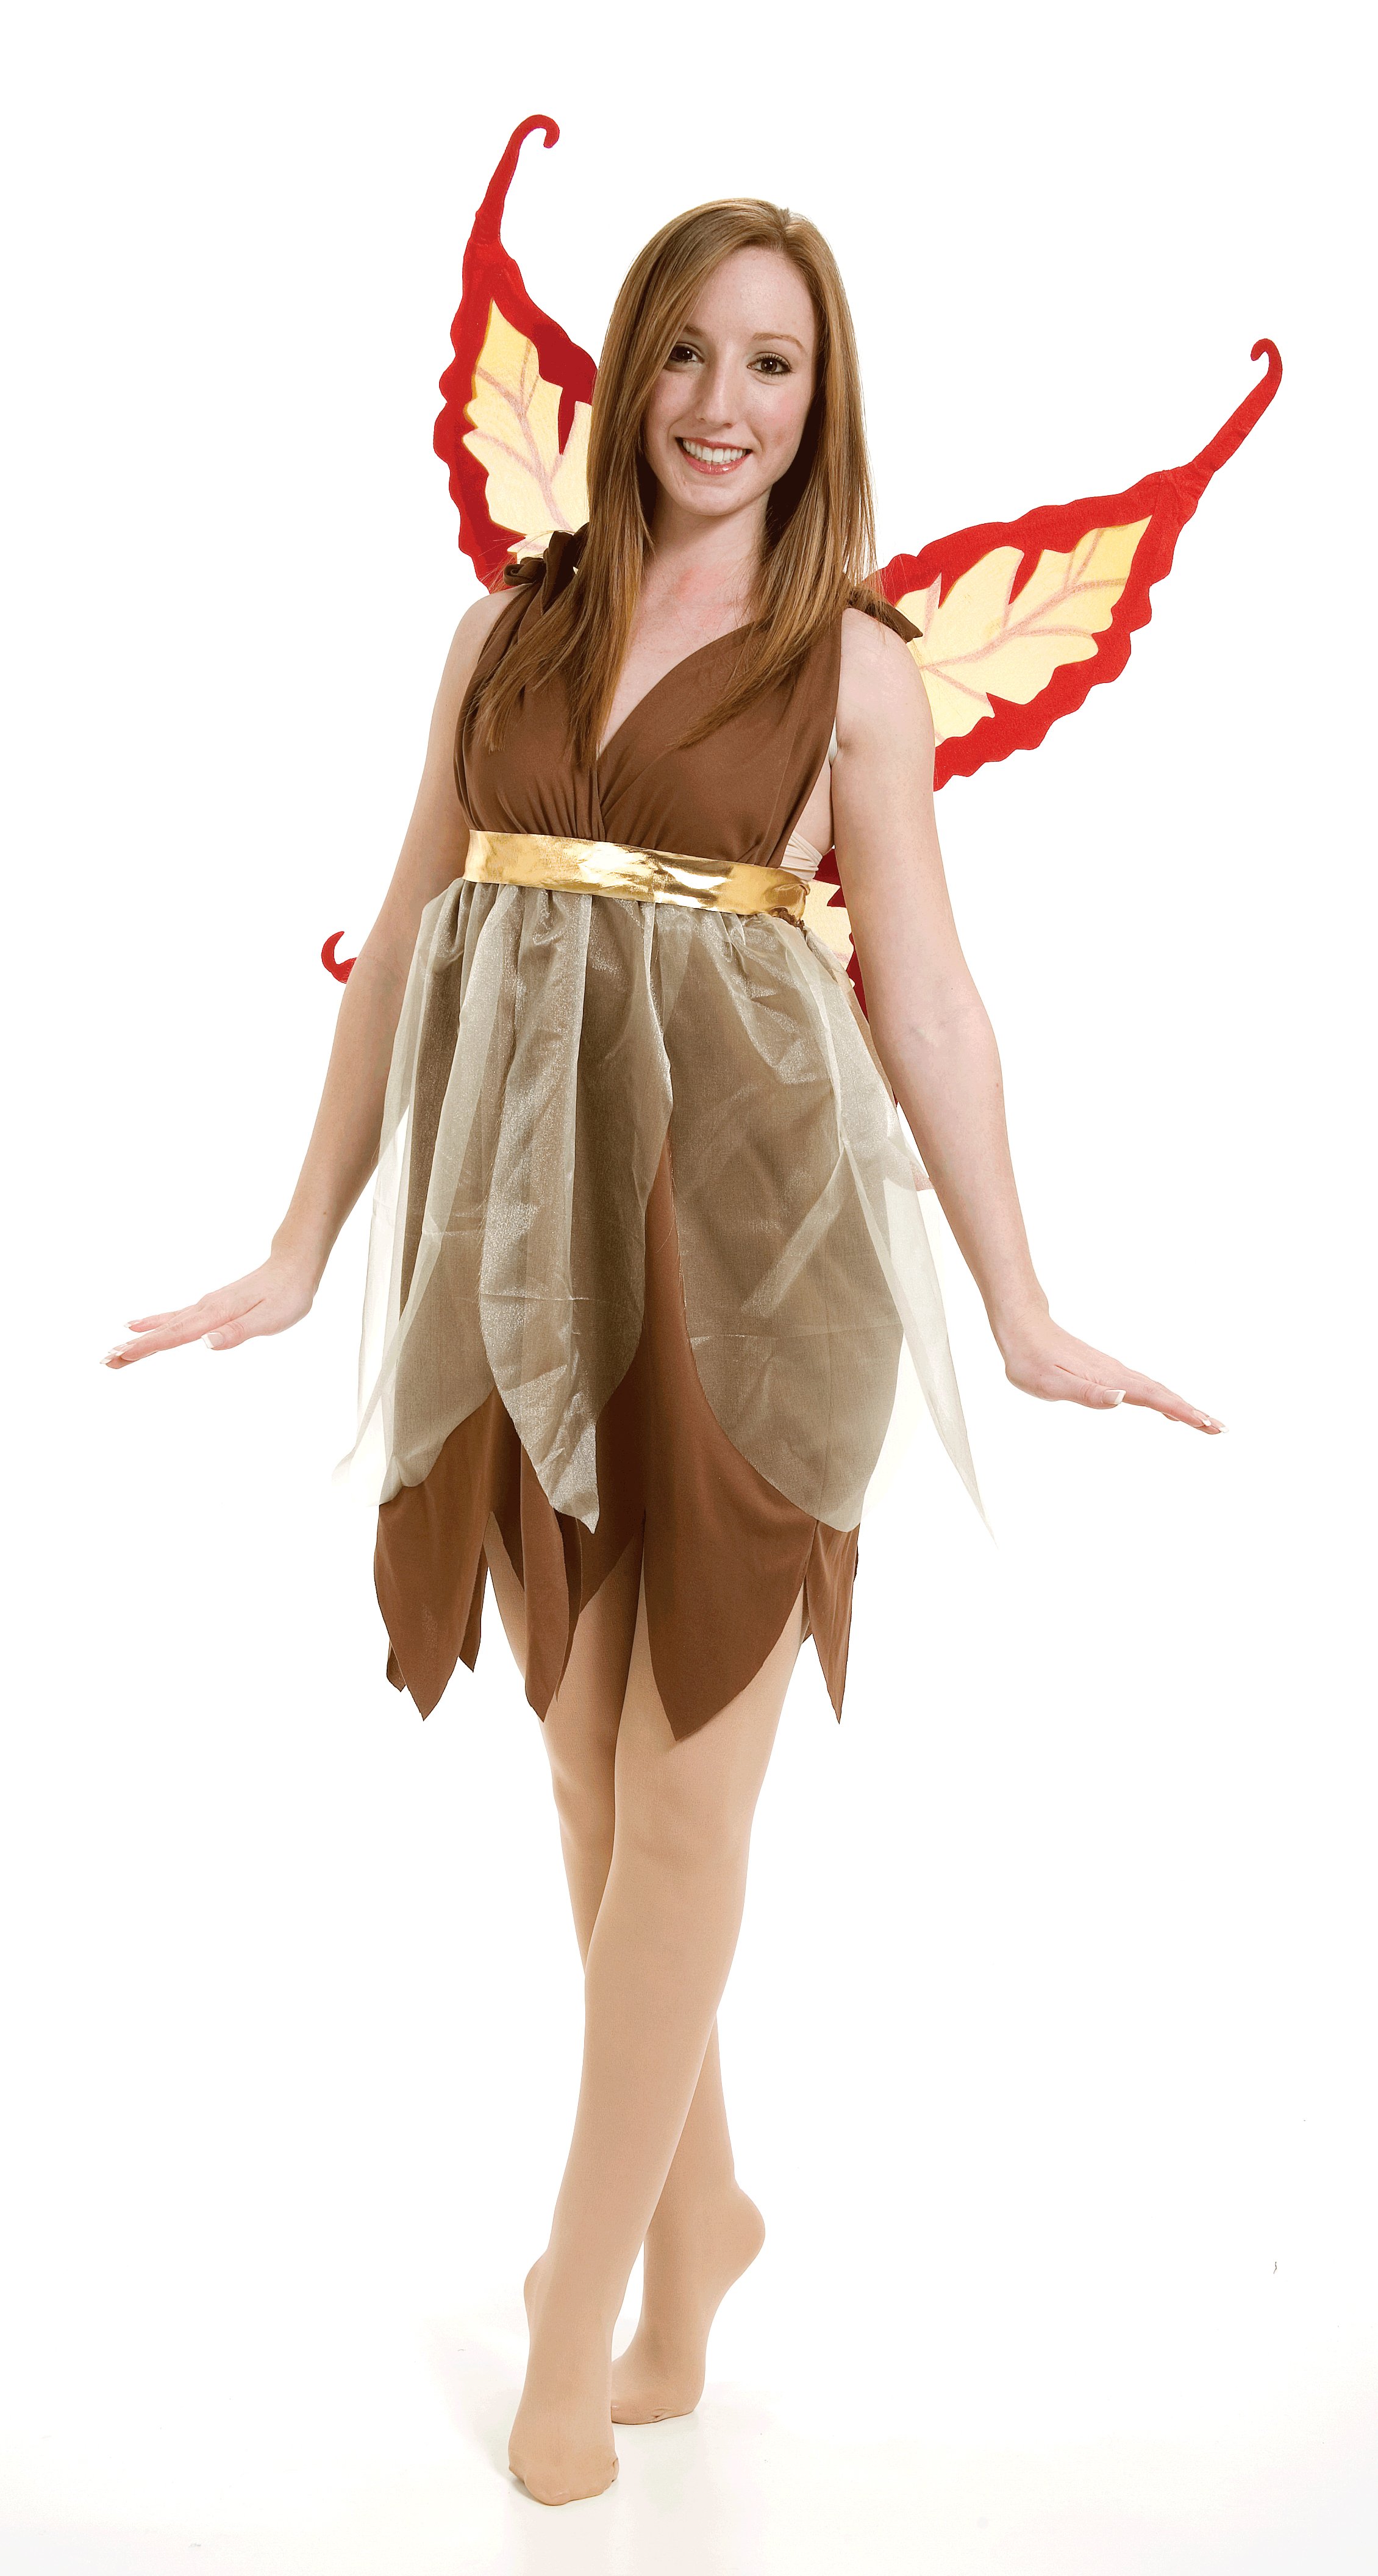 Autumn Fairy Adult Costume